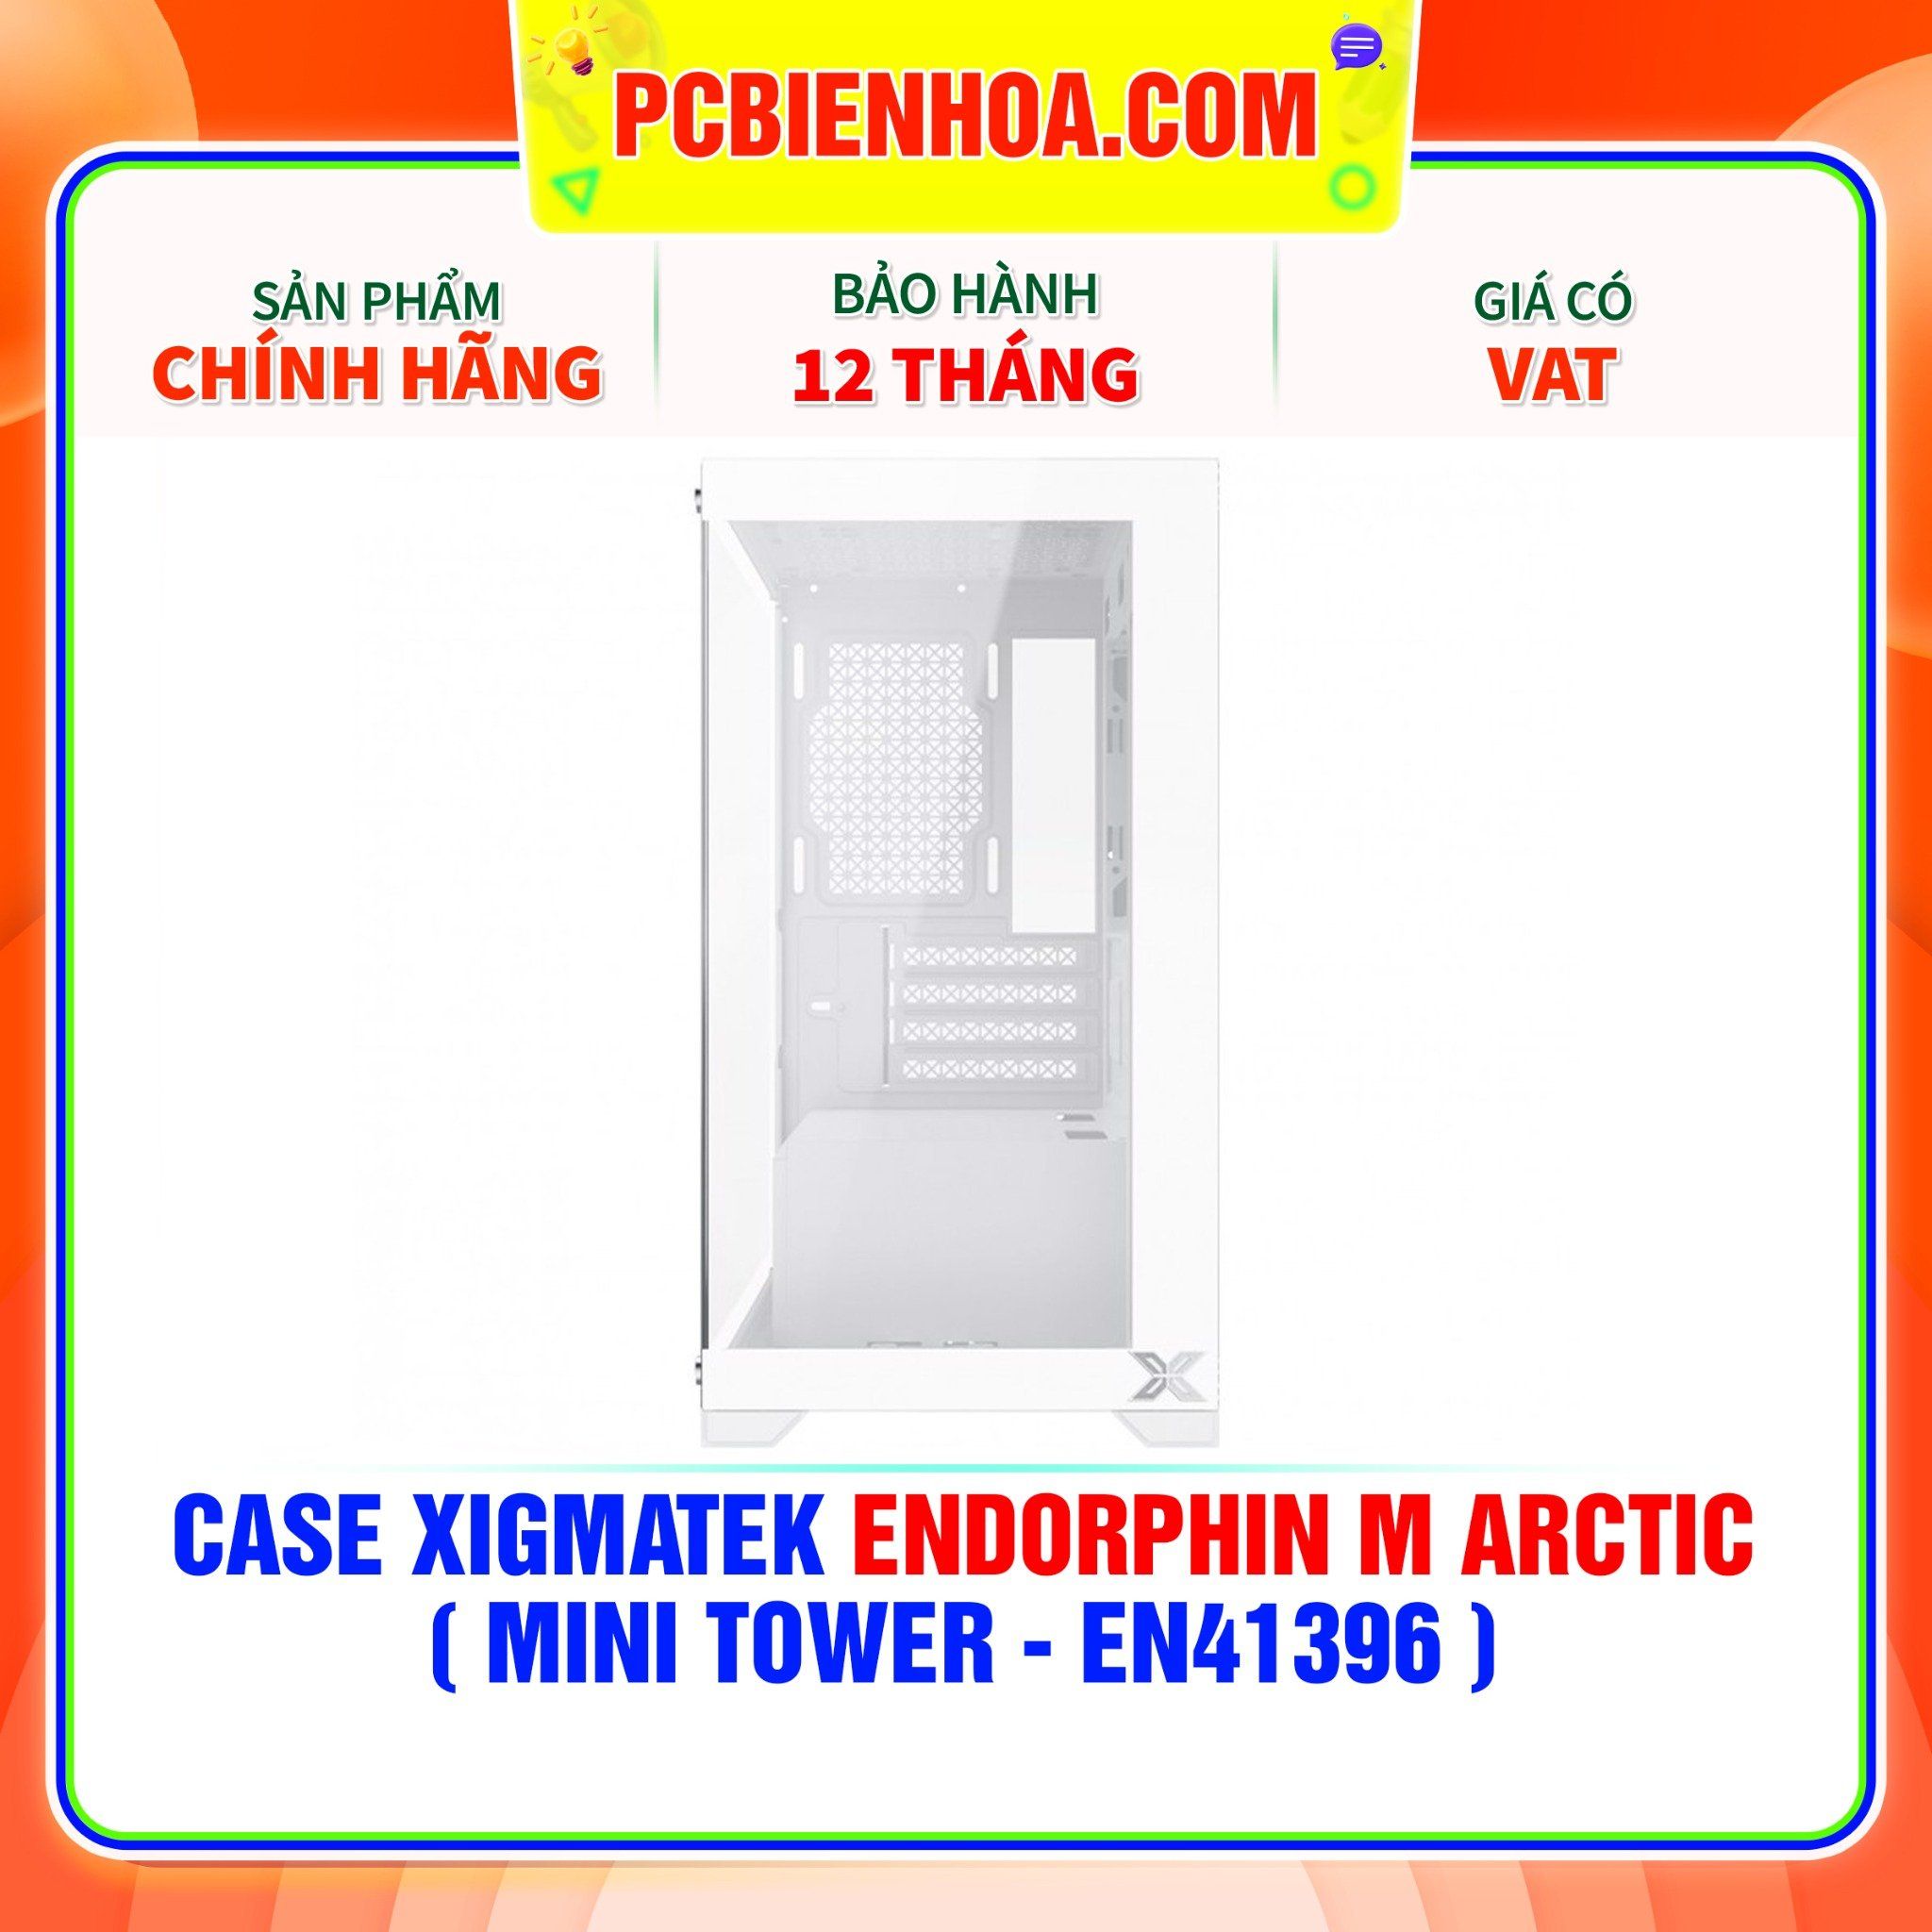  CASE XIGMATEK ENDORPHIN M ARCTIC ( MINI TOWER - EN41396 ) 